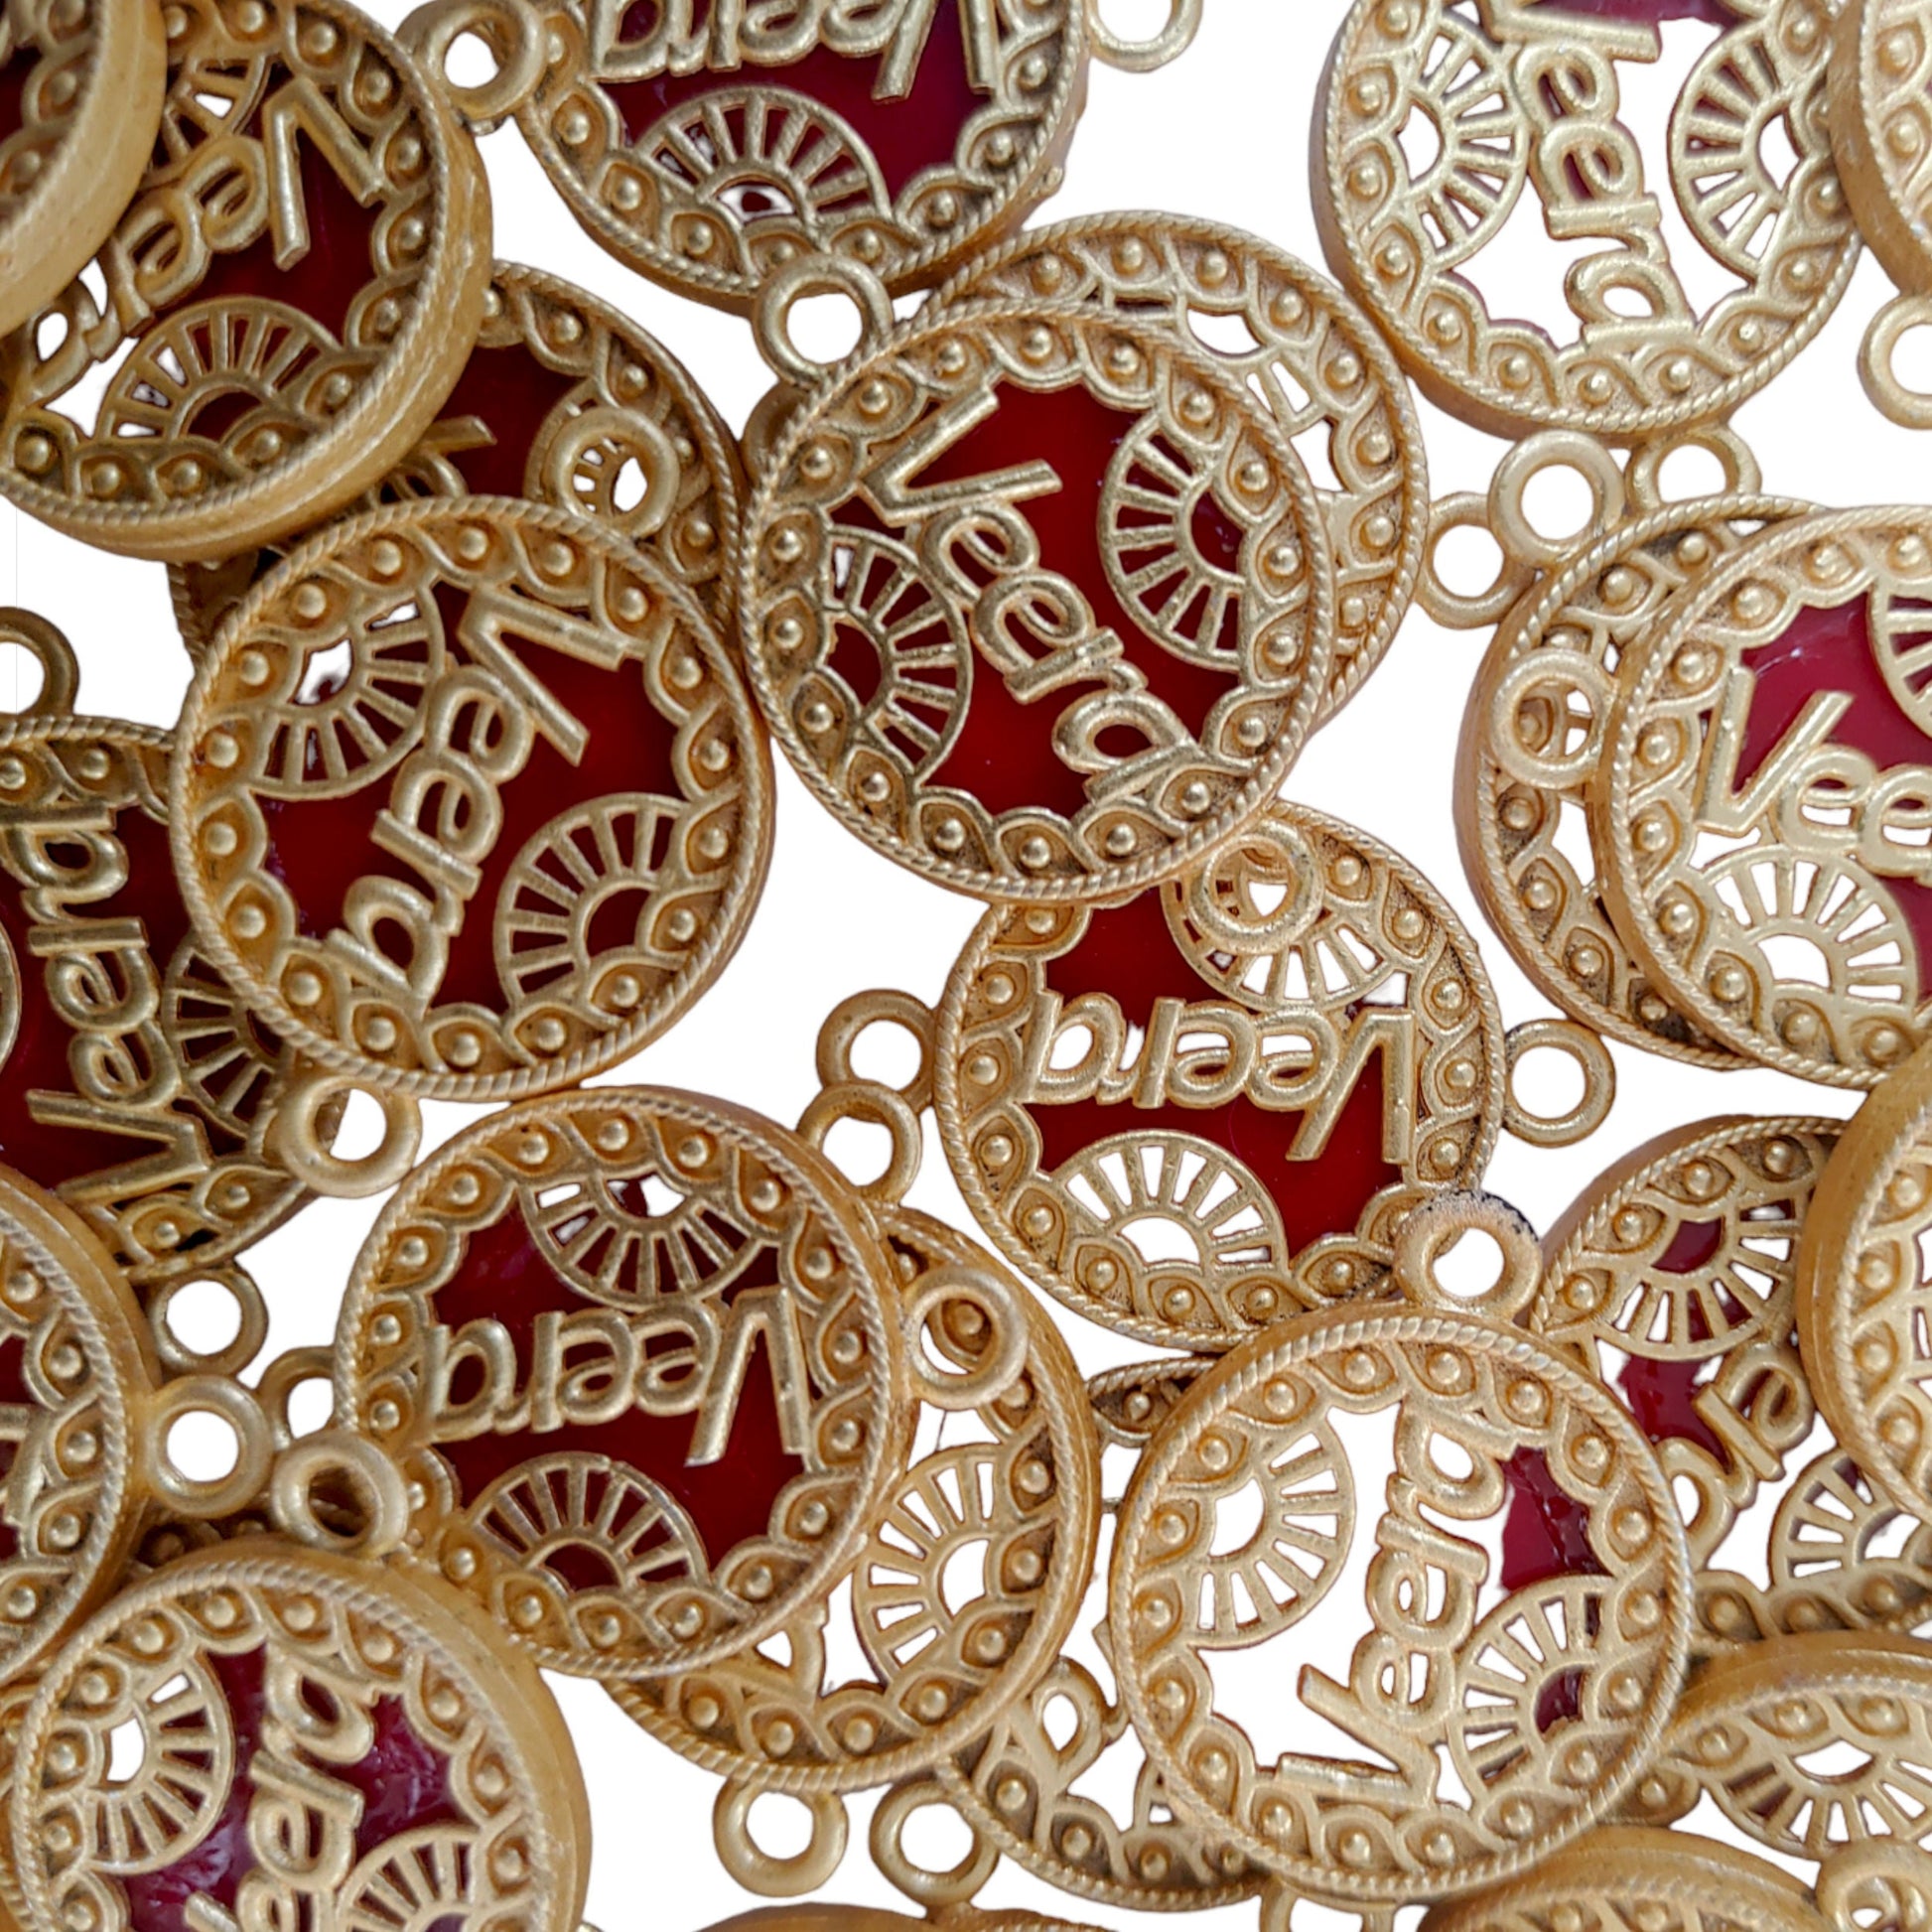 Indian Petals Veera Shape Metal Die Cast Rakhi Pendant Motif for Rakhi, Jewelry designing and Craft Making or Decor